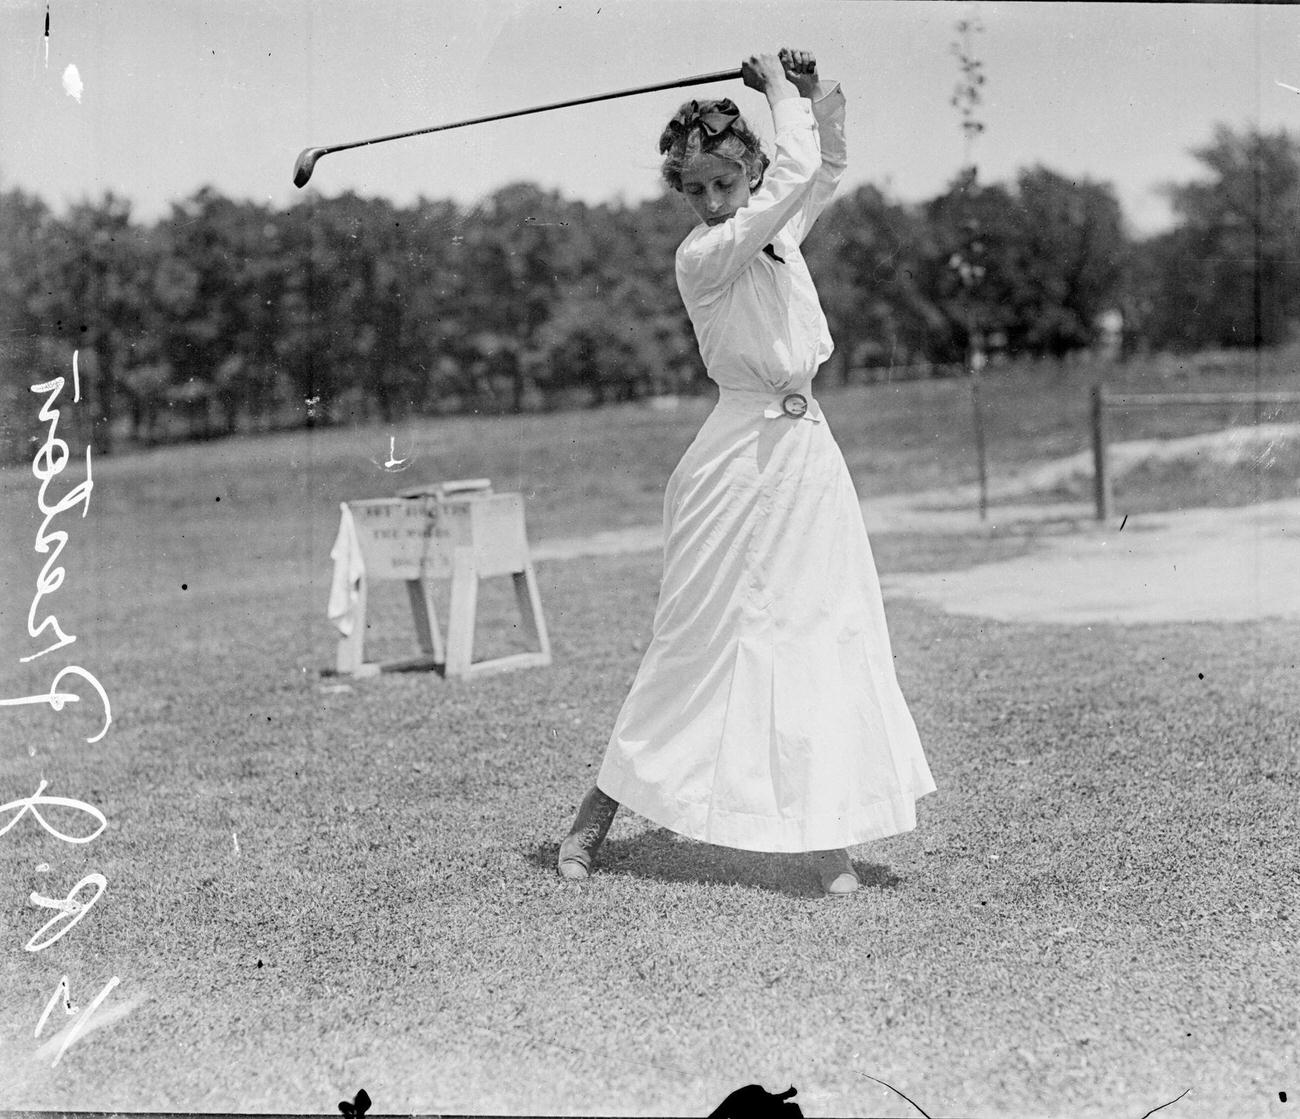 Mrs. R. J. Preston golfing near Chicago, Illinois, circa 1910.